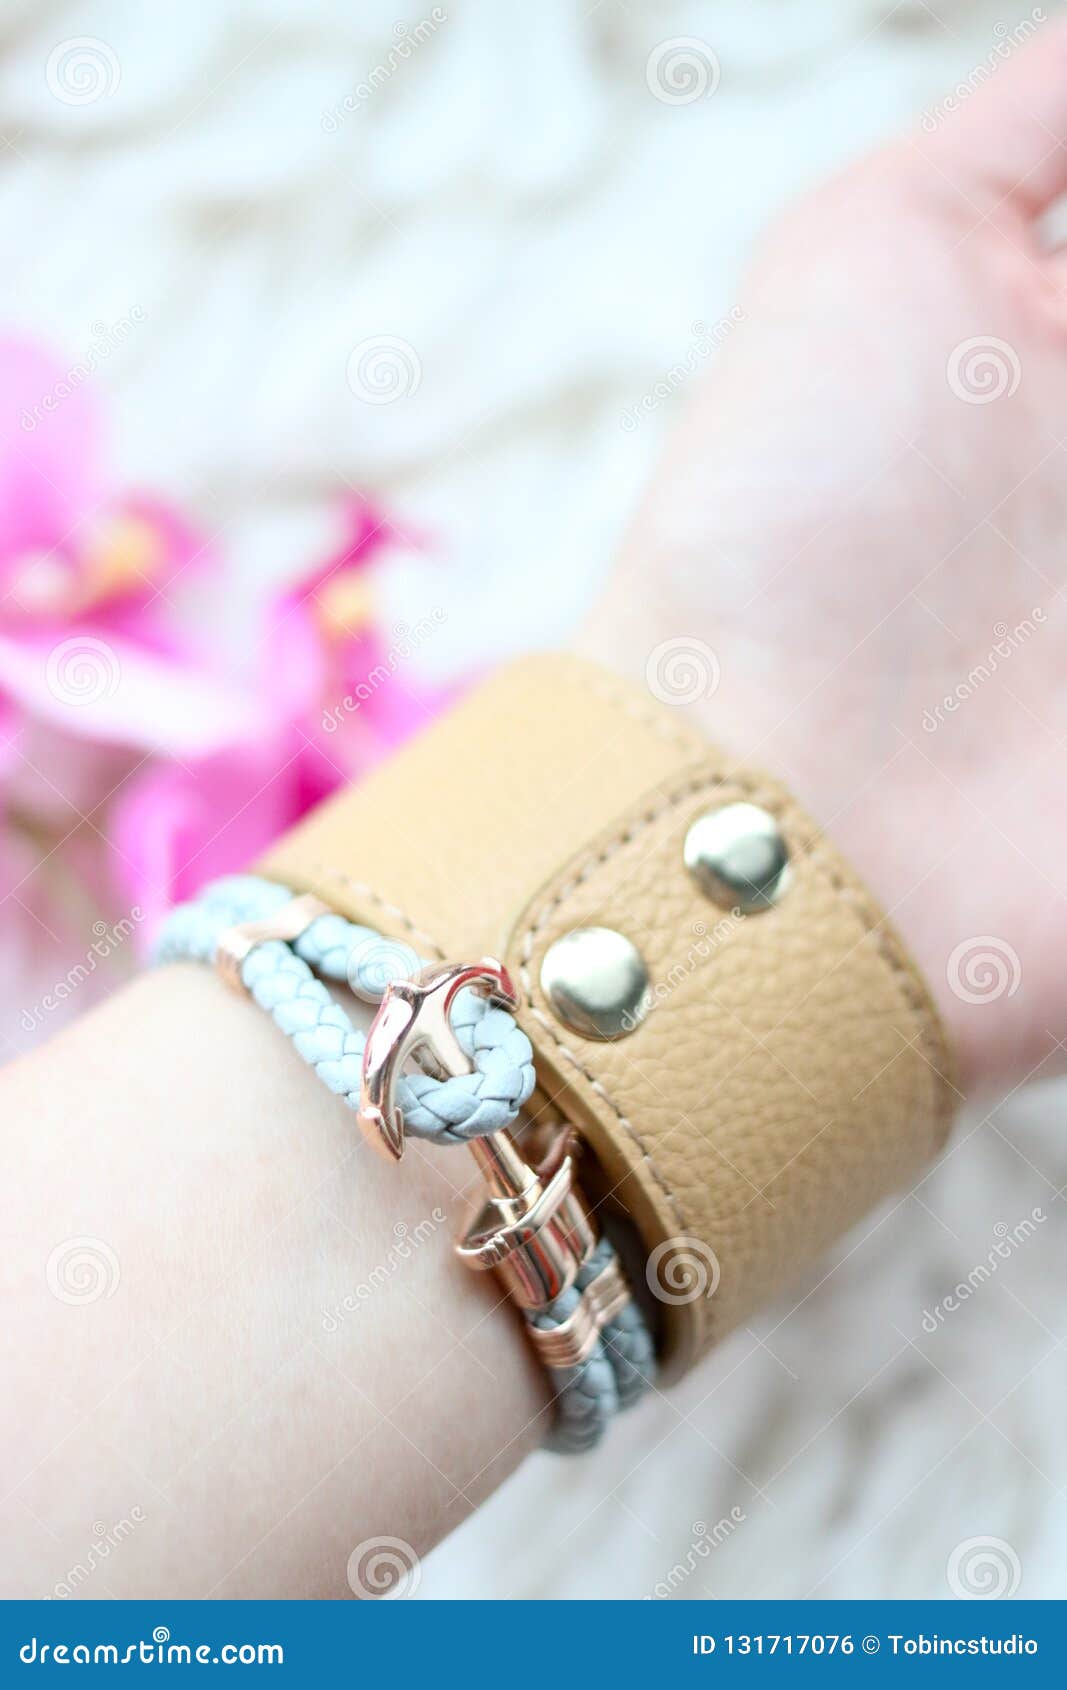 2PCS Wrap Multilayer Genuine Leather Bracelet Braided Rope Men's Fashion  Jewelry | Leather charm bracelets, Genuine leather bracelet, Bracelets  women fashion